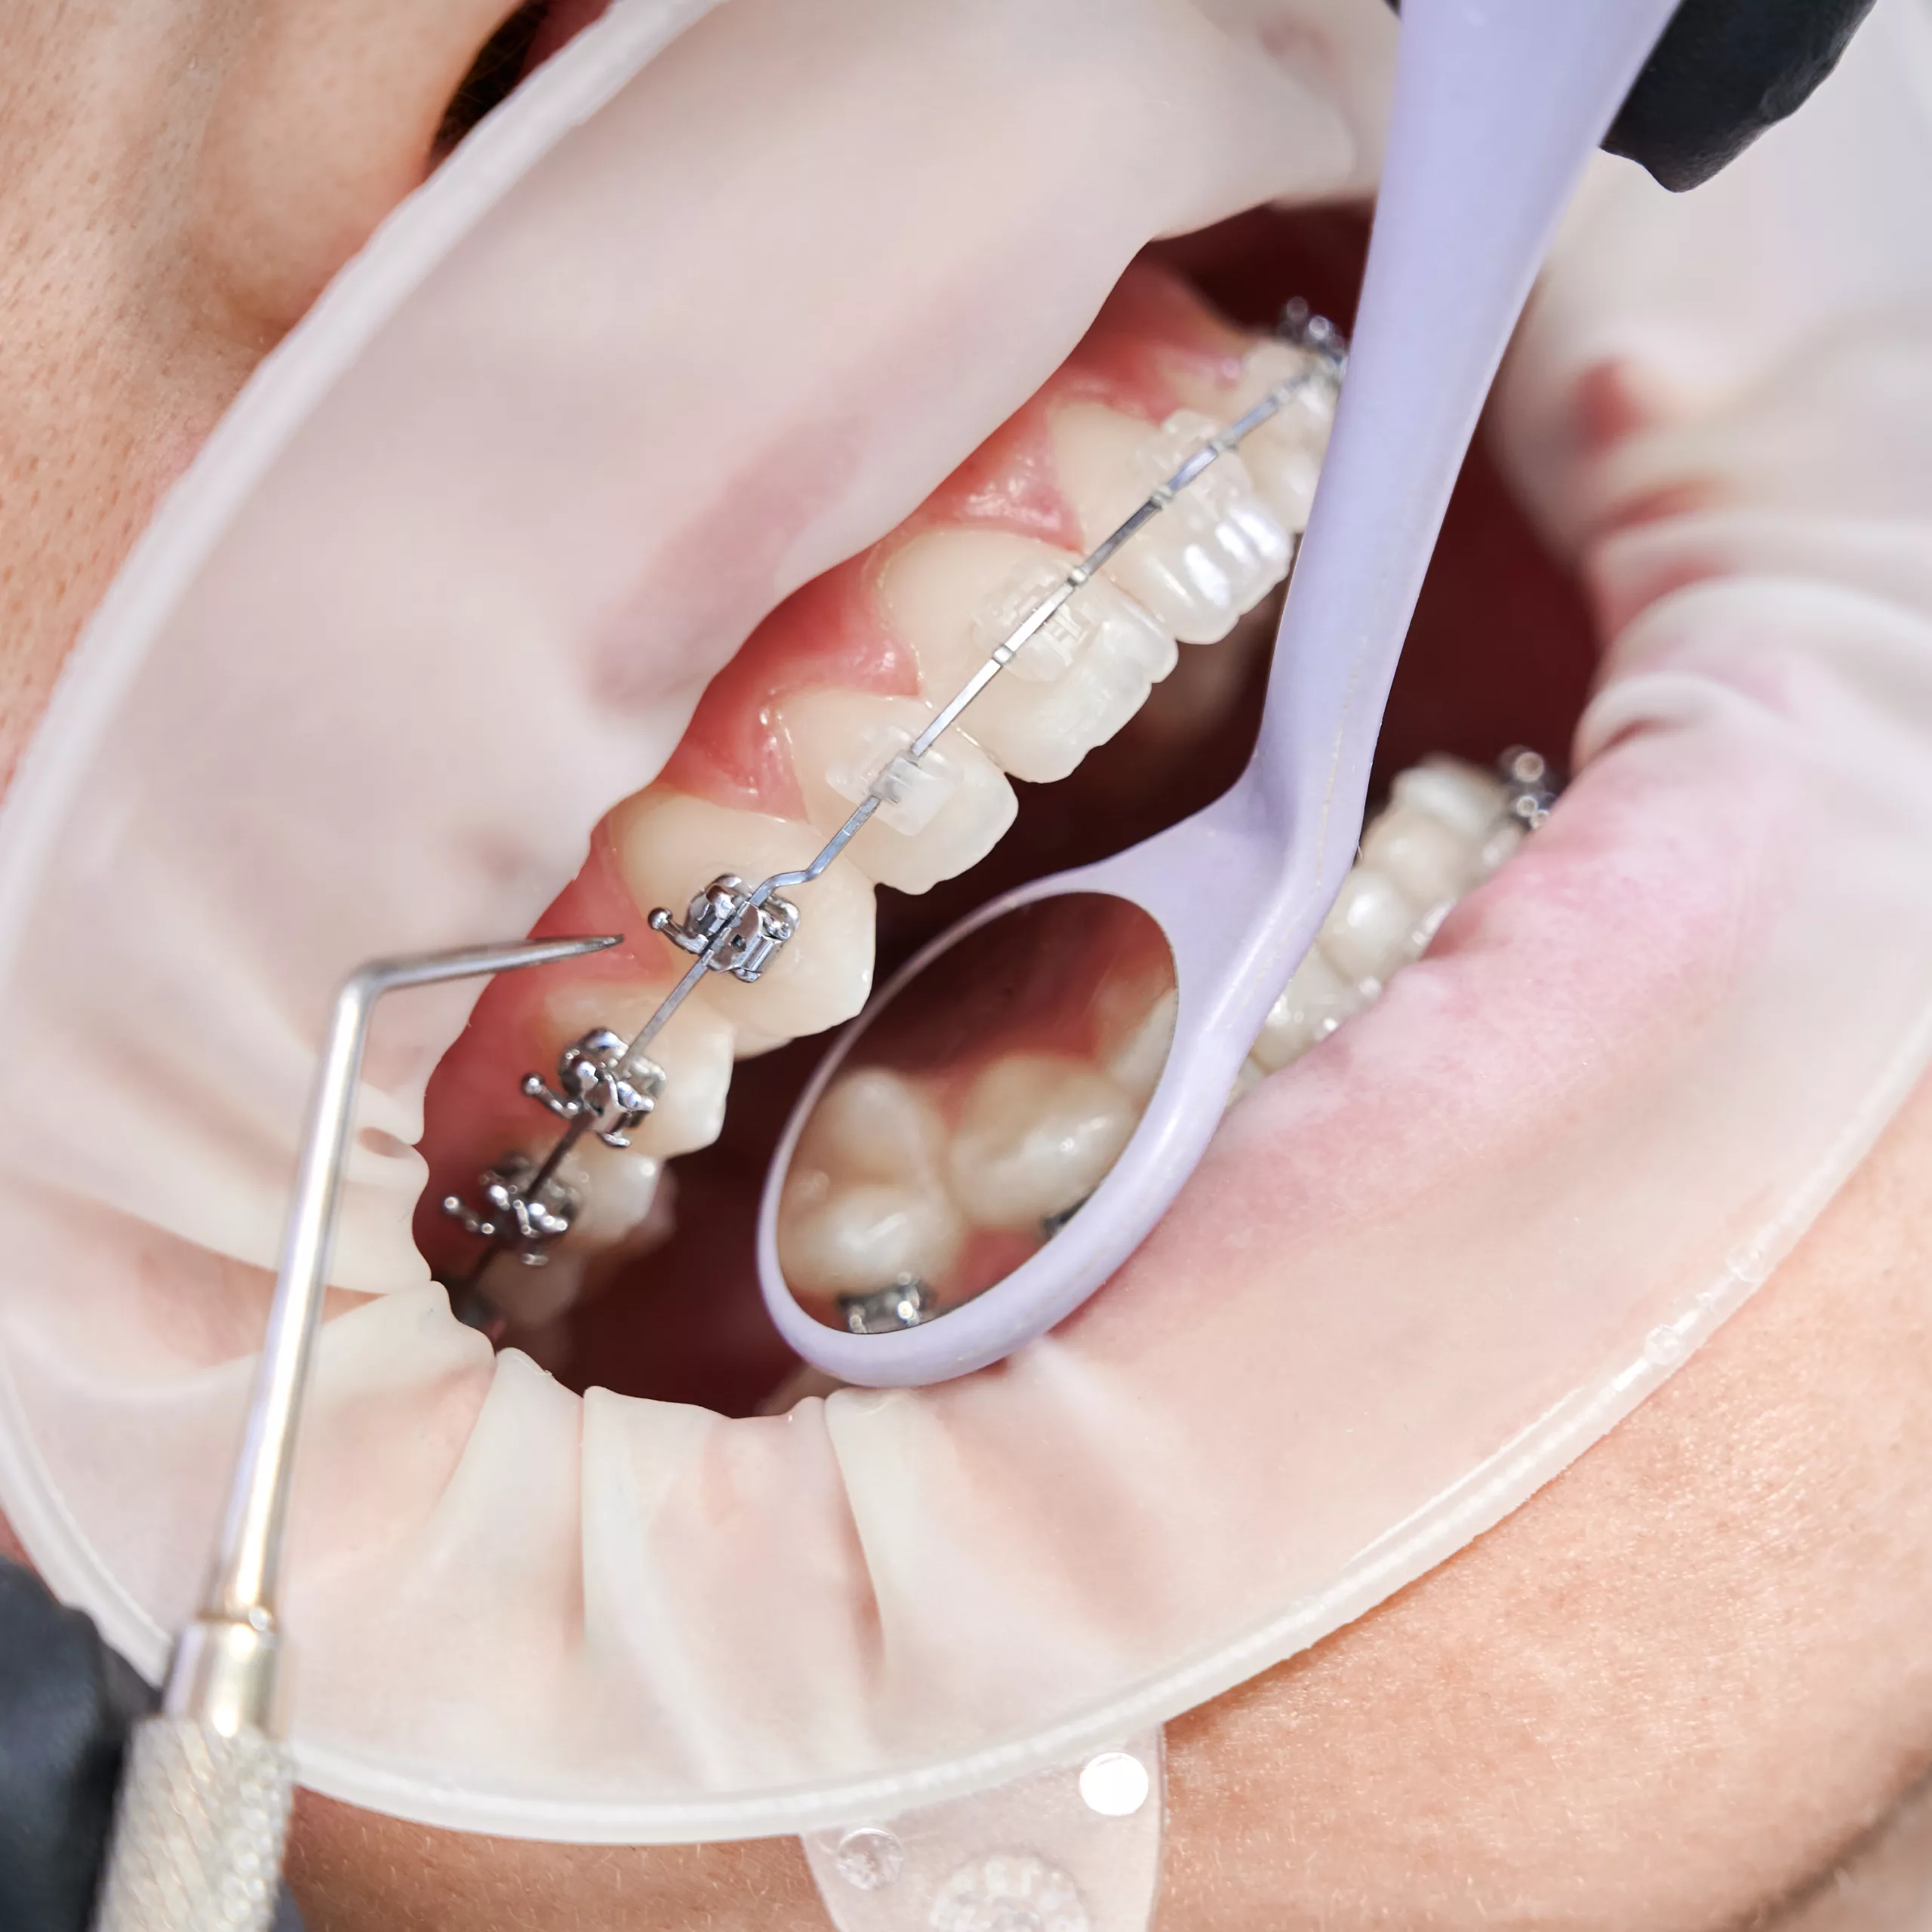 Orthodontic Treatment 